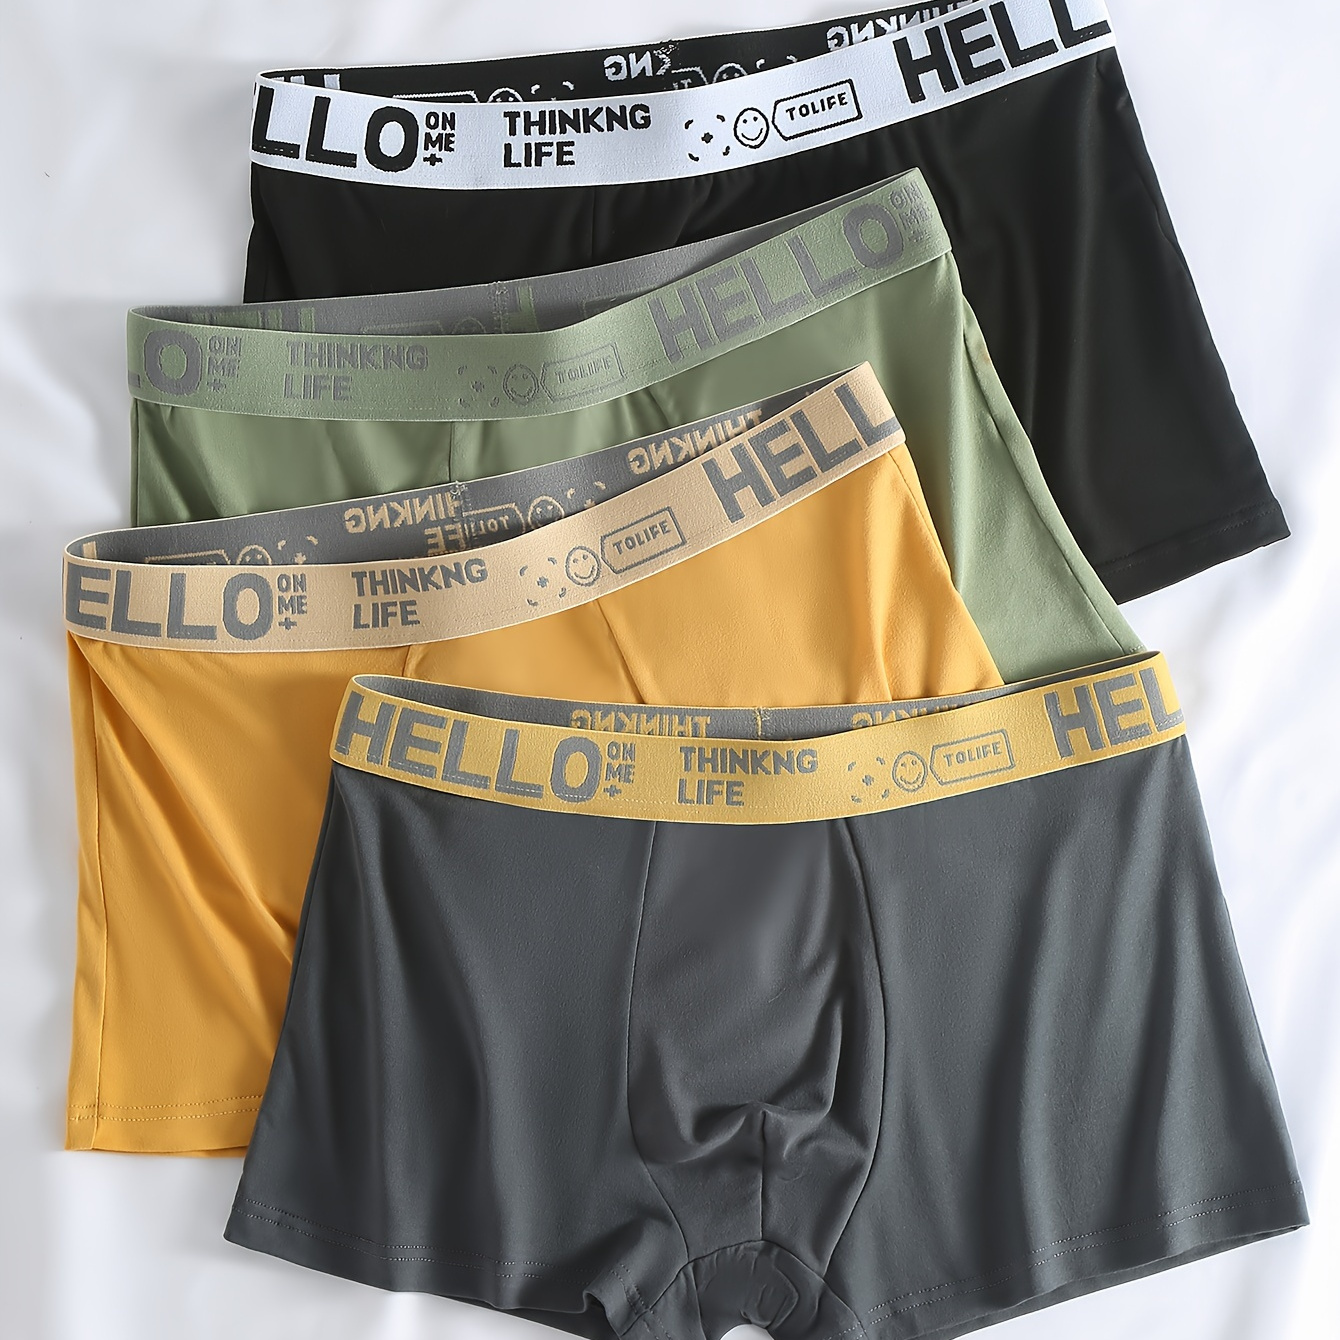 

4pcs Men's Underwear, 'hello' Print Fashion Breathable Comfy High Stretch Boxer Briefs Shorts, Sports Trunks